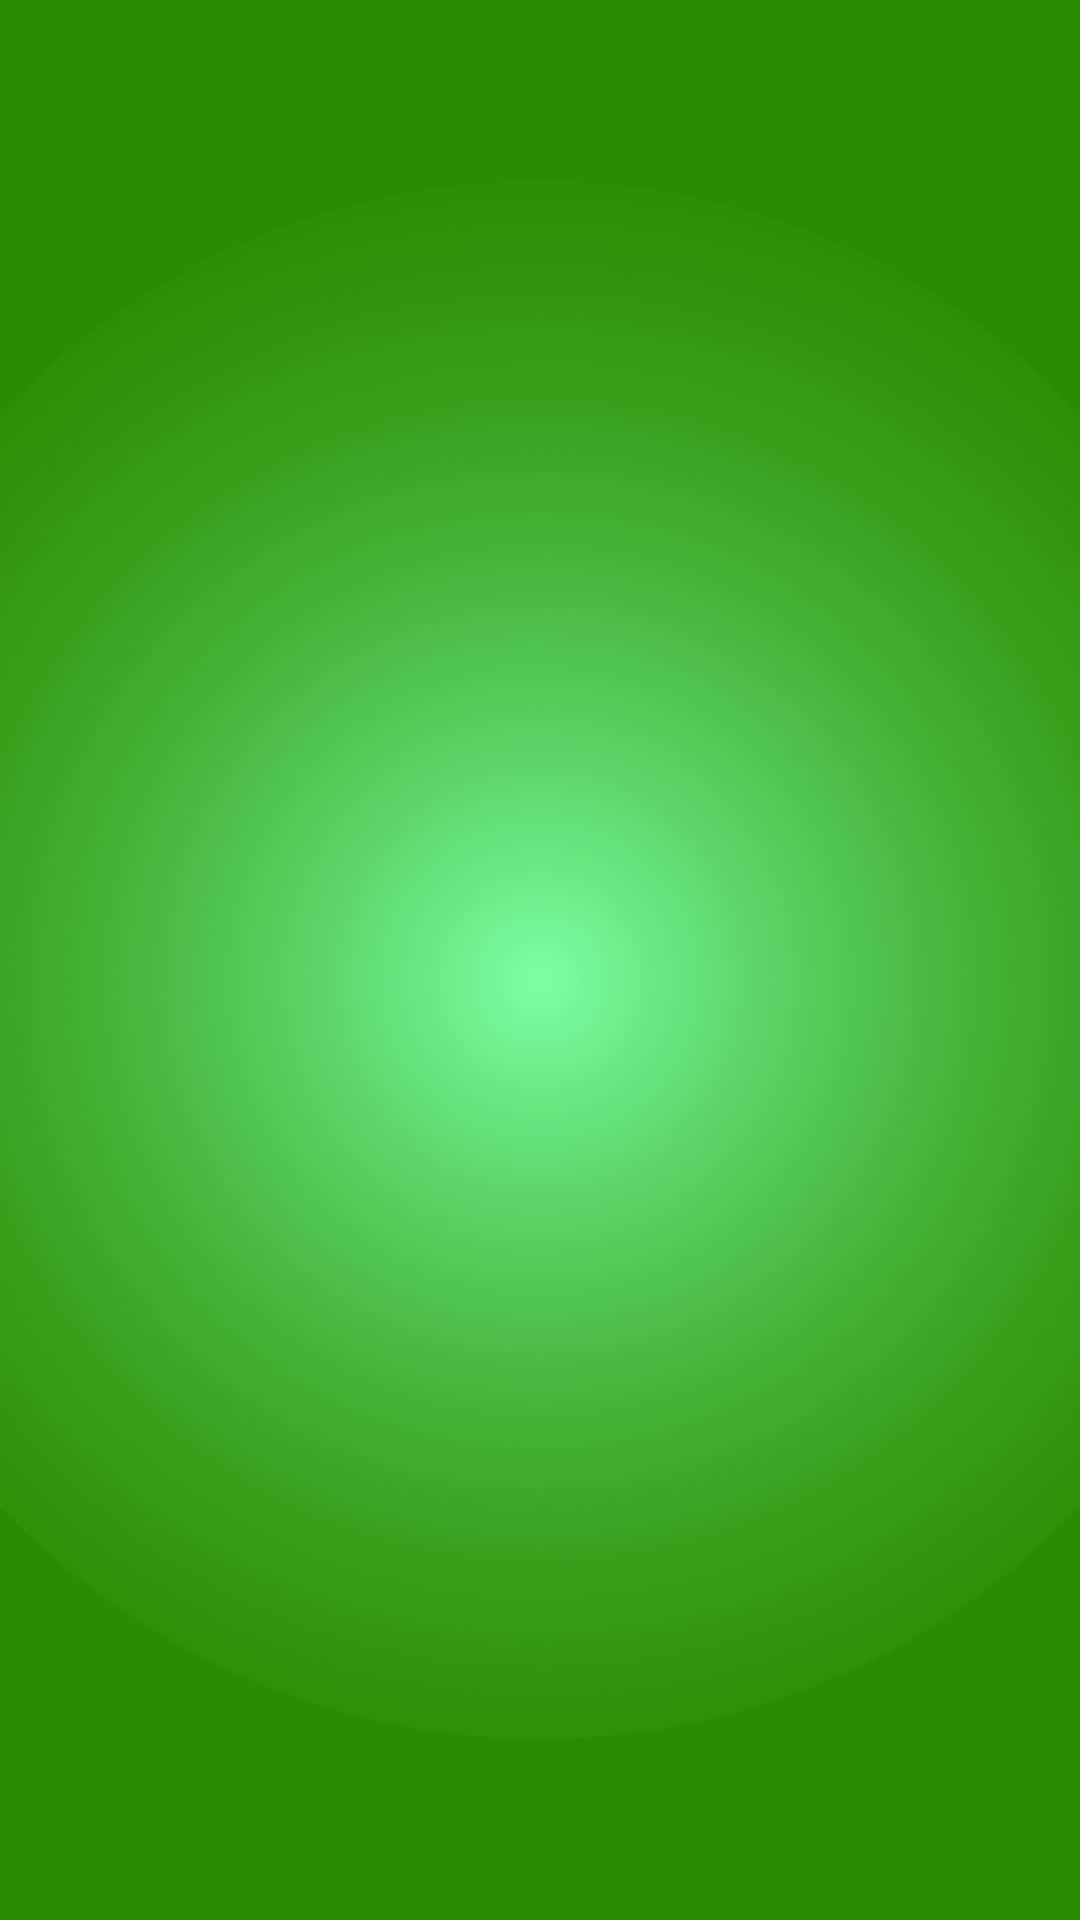 A Rich Green Gradient Background